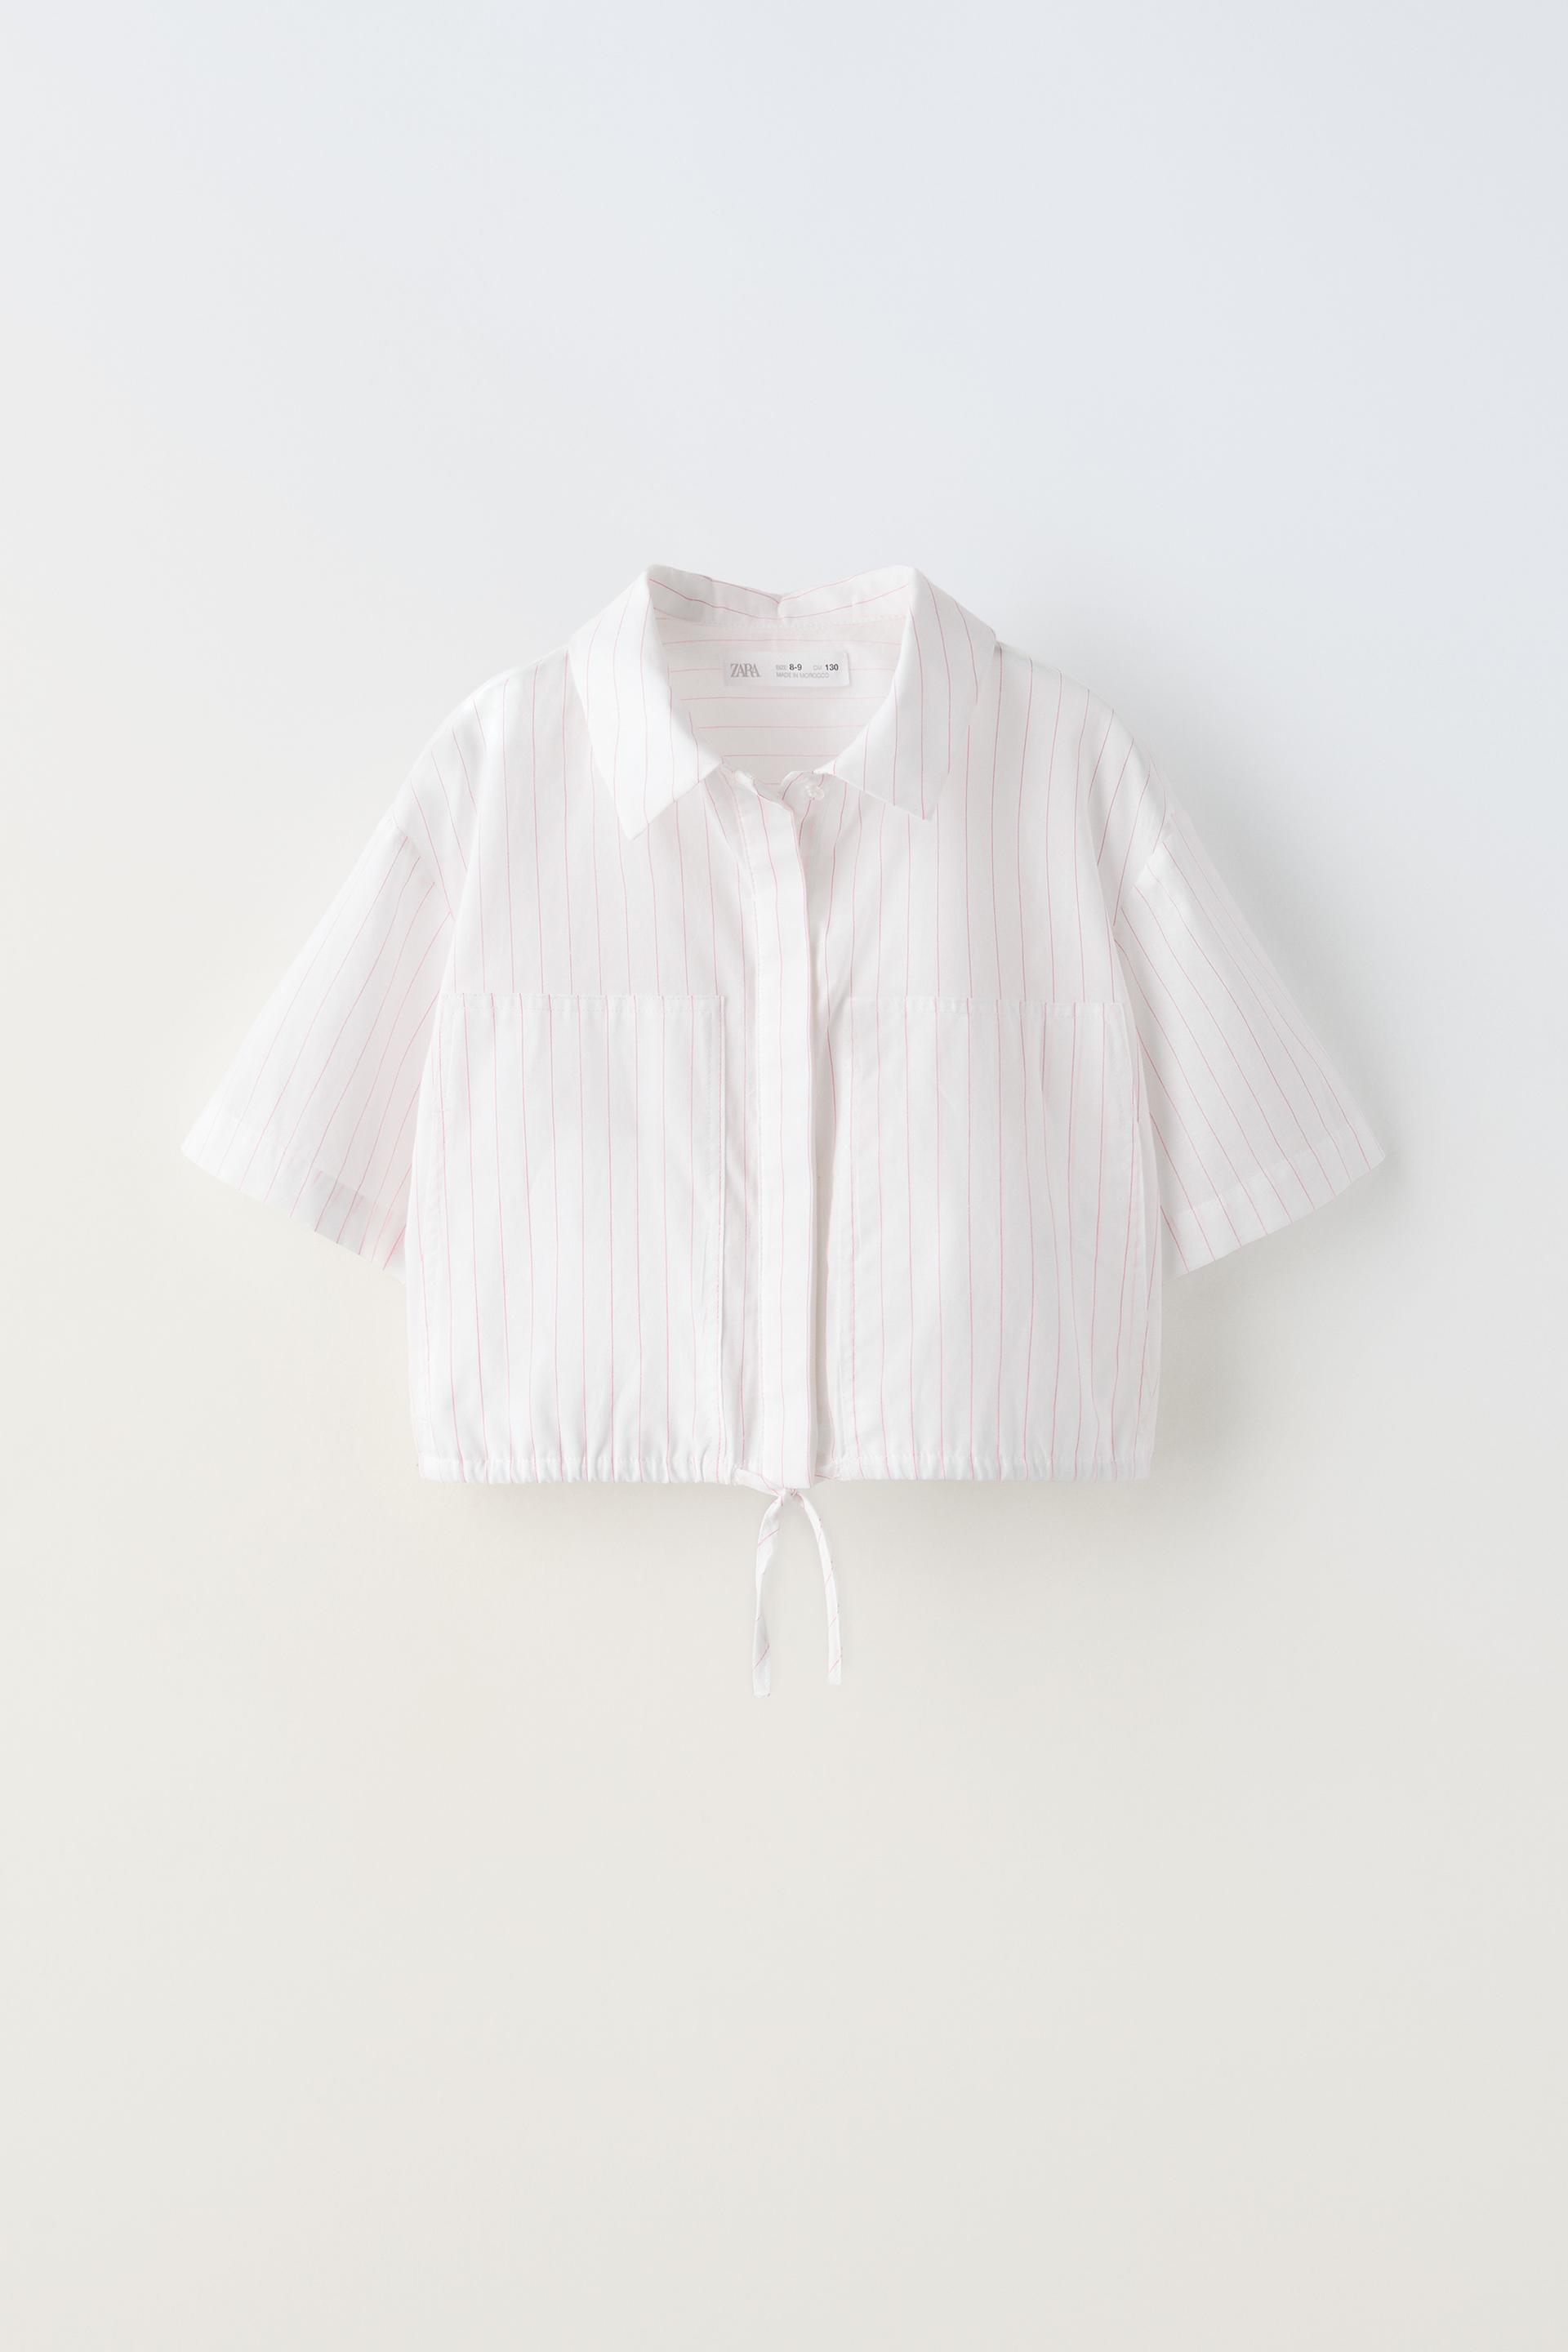 Рубашка Zara Striped Shirt, розовый-белый рубашка zara cropped striped розовый